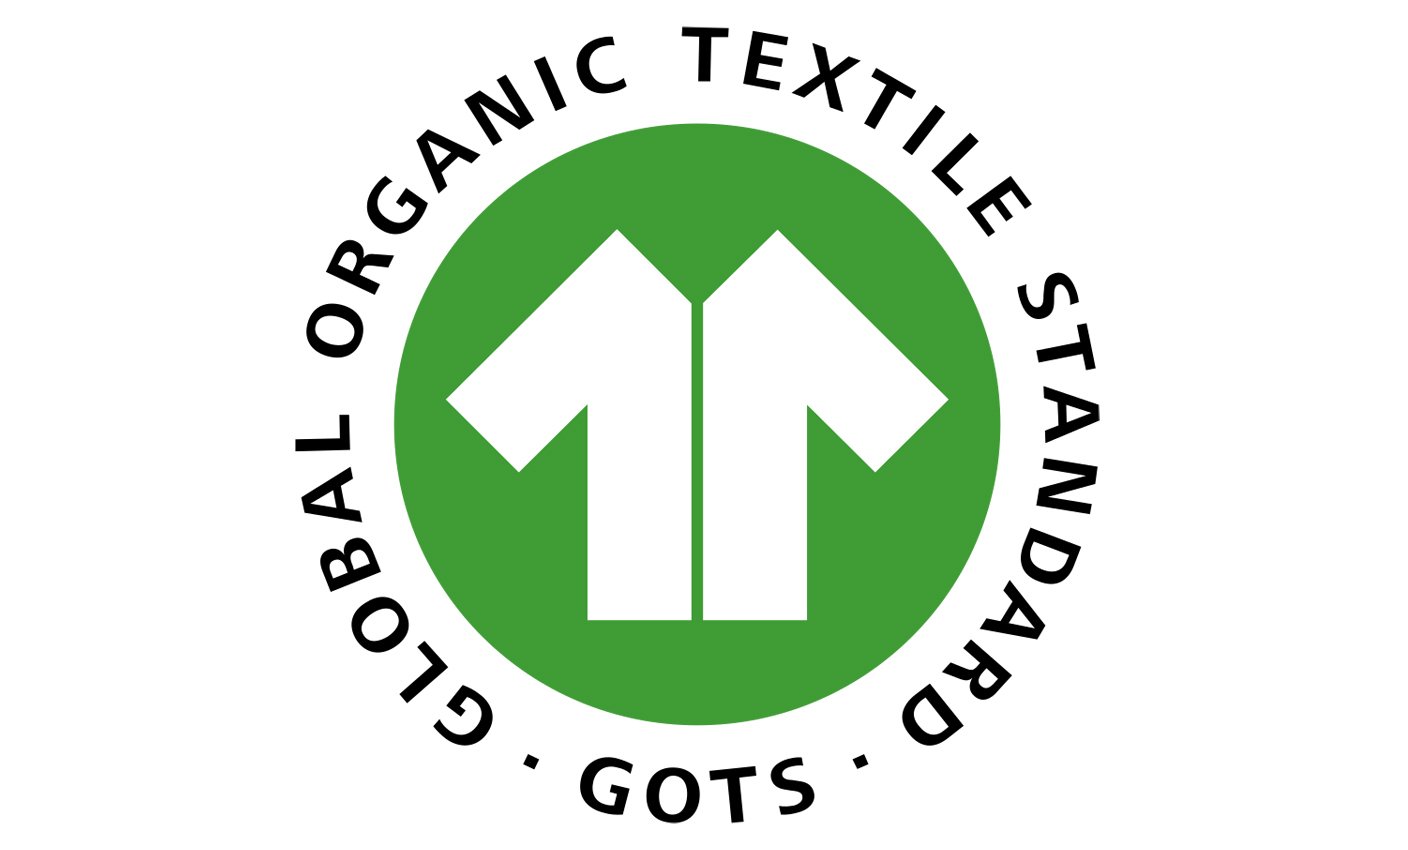 Seetees Gots Cotton - Cotone Organico Biologico